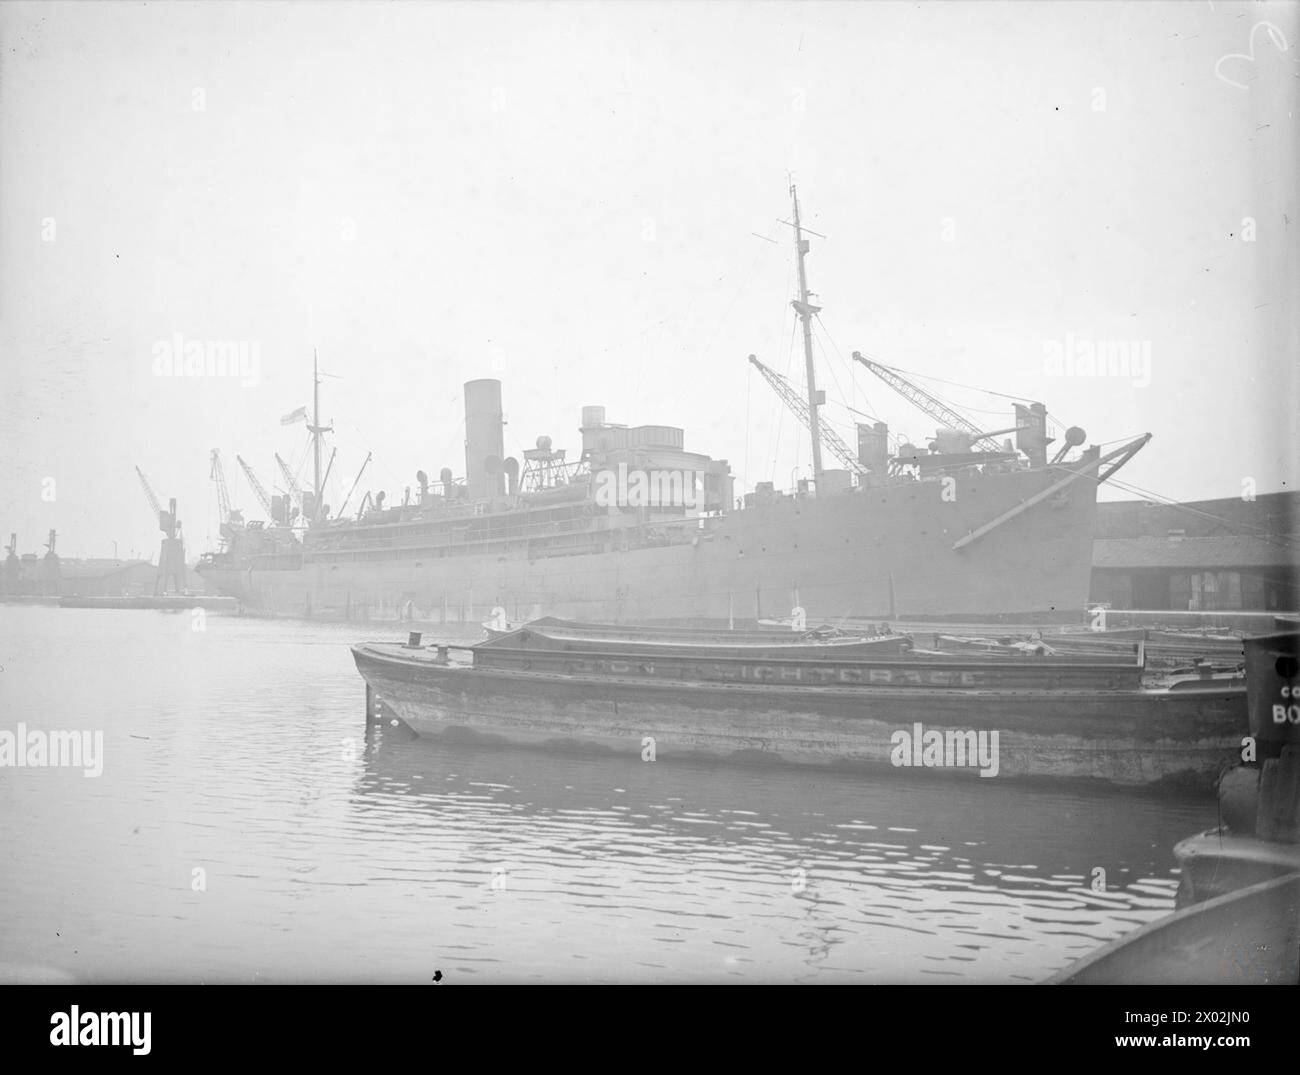 HMS HILARY, NAVE BRITANNICA D'IMBARCO SULL'OCEANO. 31 MARZO 1942, SURREY DOCKS, LONDRA. - HMS HILARY situata nel bacino della Royal Navy, HILARY (HMS) Foto Stock